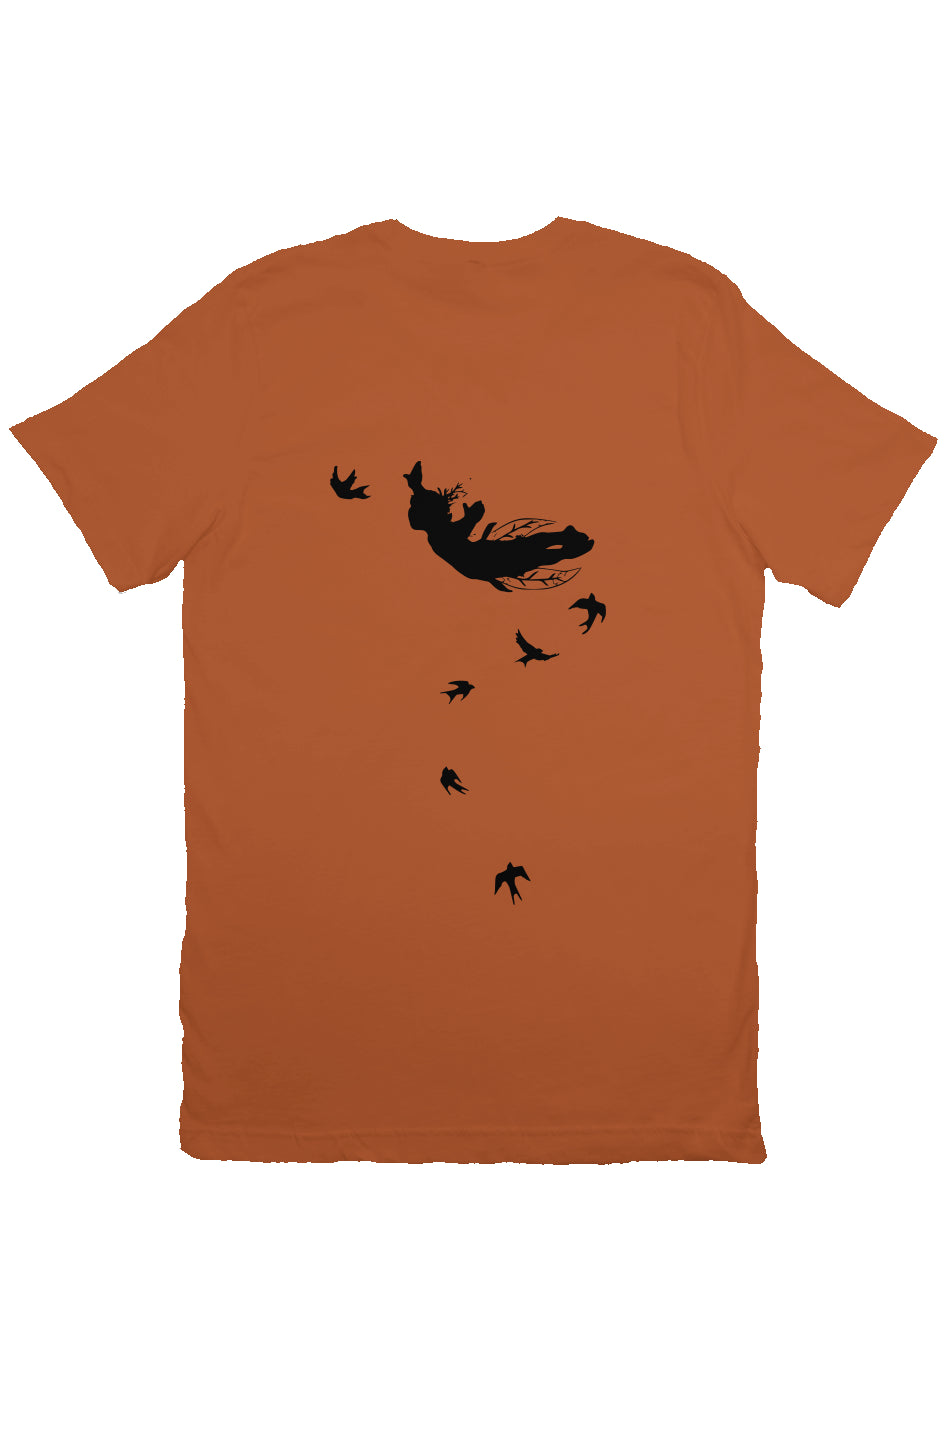 Peter Pan Unisex Adult T-shirt autumn